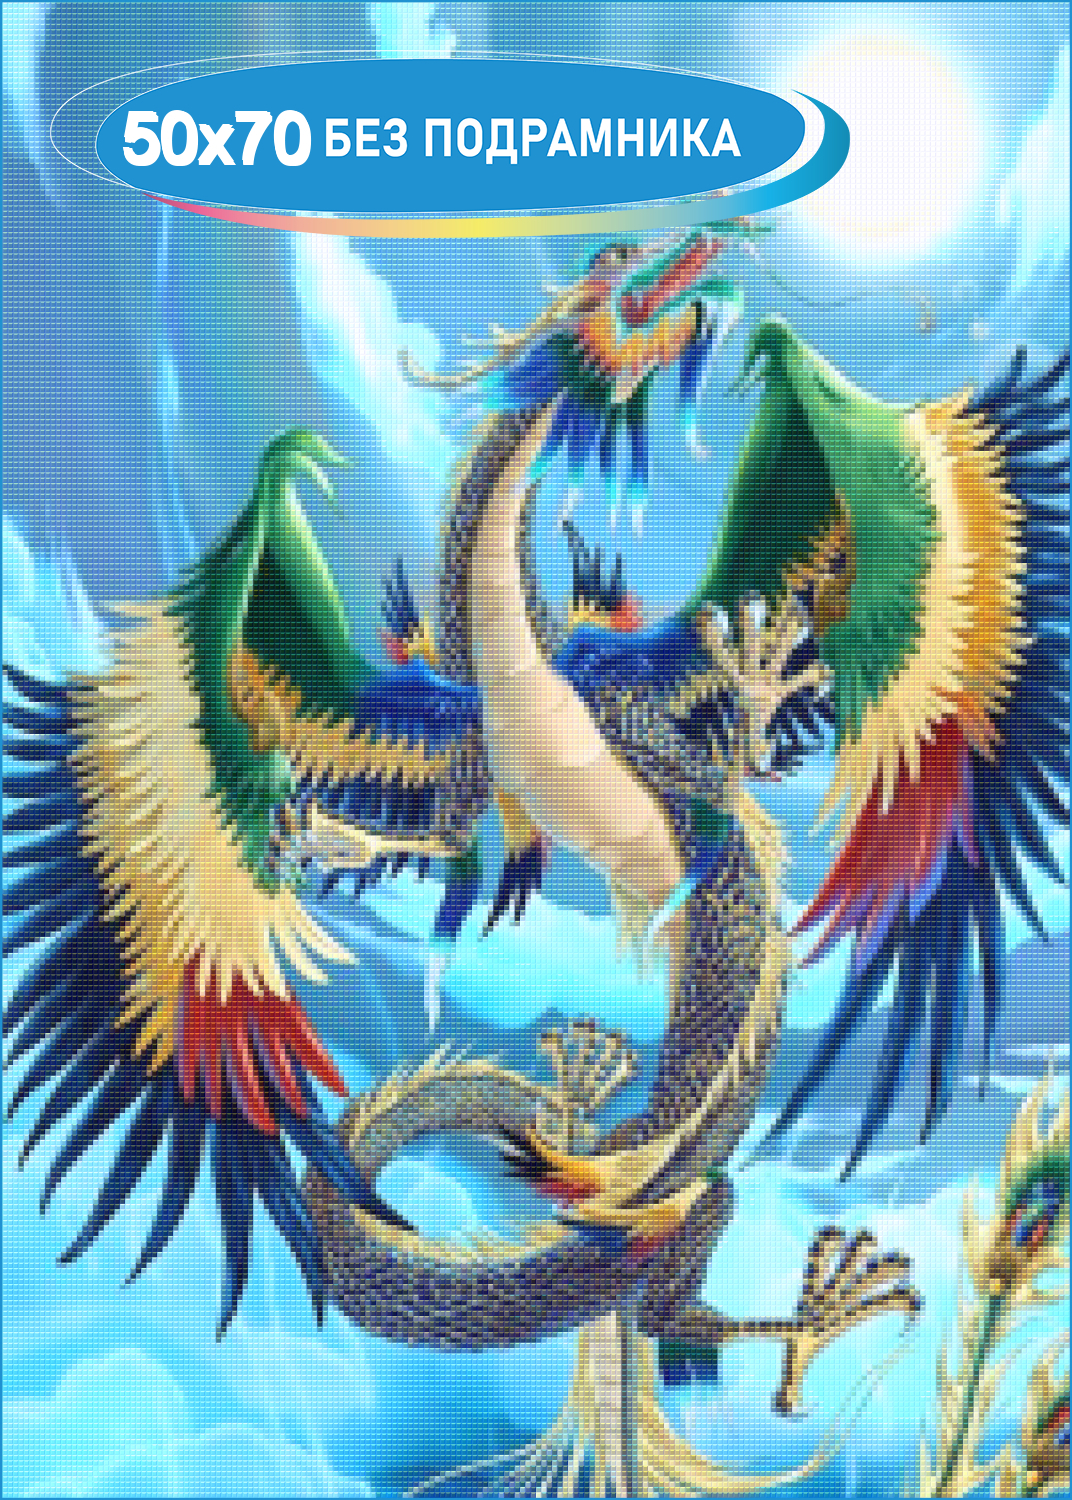 Китайская мифология мифические. Сузаку дракон Феникс. Хуанлун дракон желтый мифология. Хуанлун дракон в китайской мифологии. Хуанлун дракон мифология.